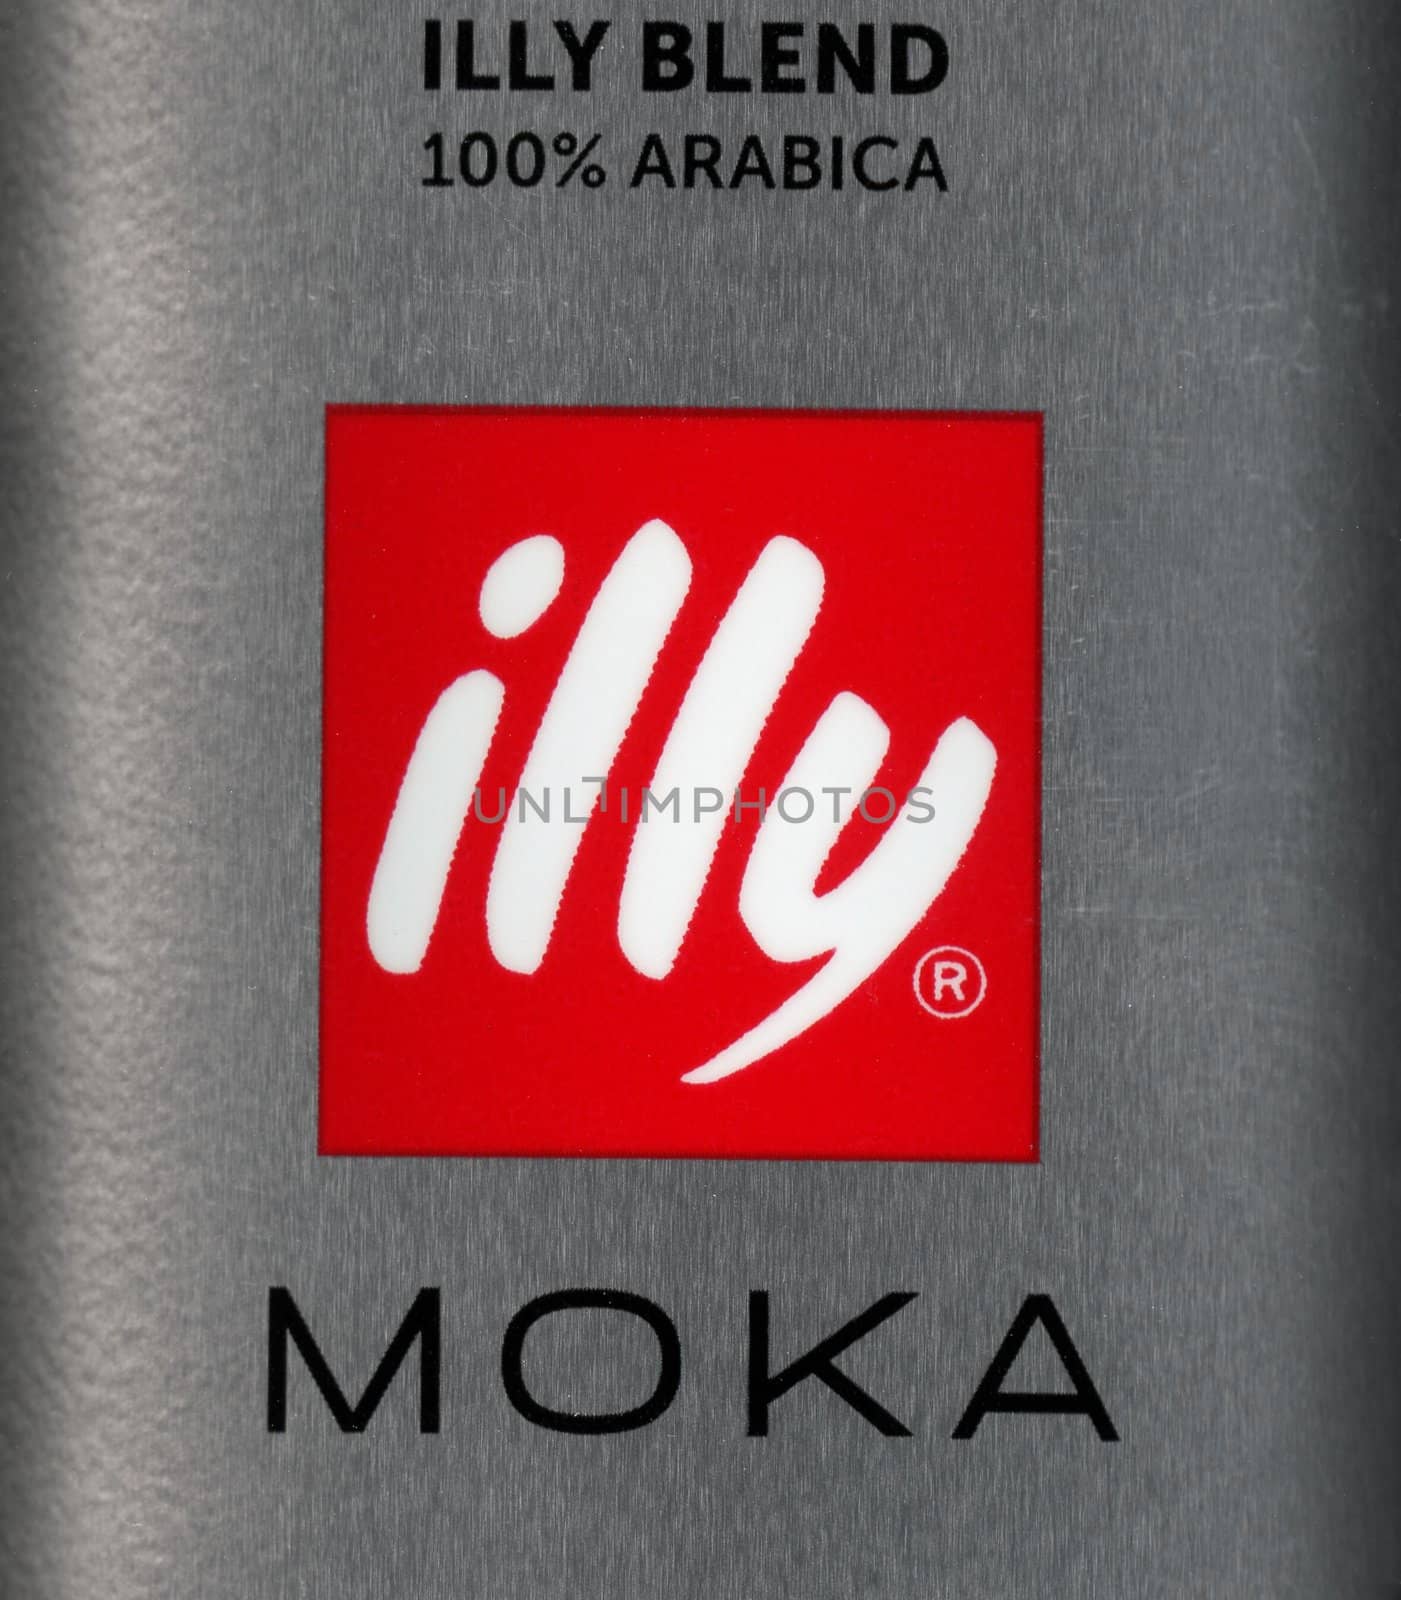 Moka Illy blend 100 percent arabica coffee in Milan by claudiodivizia